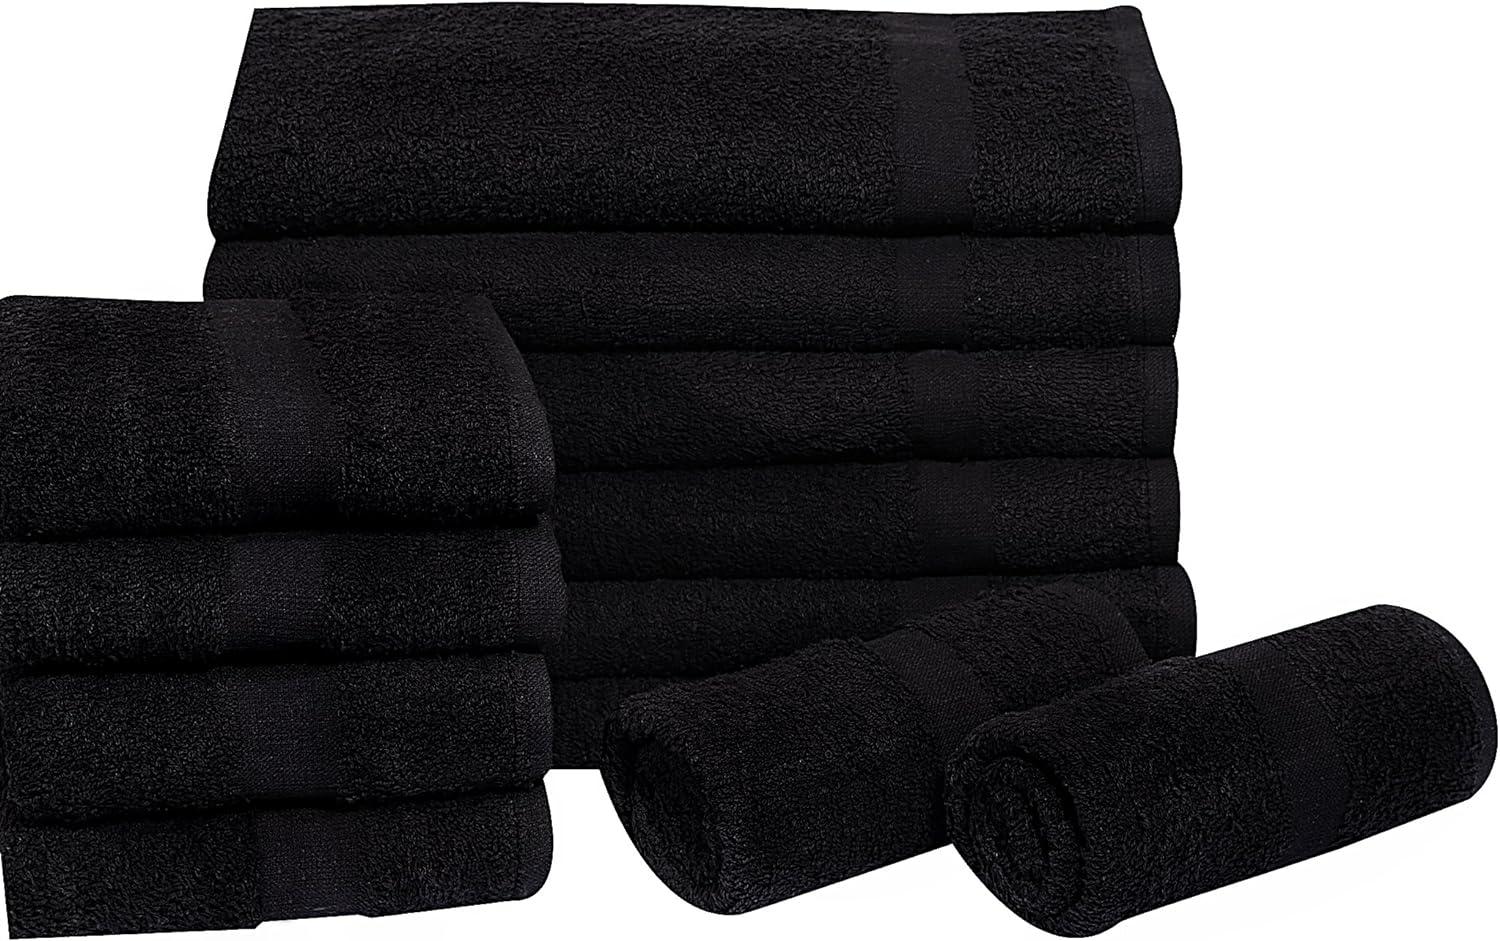 Gold Textiles Cotton Salon Towels (12-Pack, Dark Grey,16x27 inches) - Soft Absorbent Quick Dry Gym-Salon-Spa Hand Towel (100% (Dark Grey)